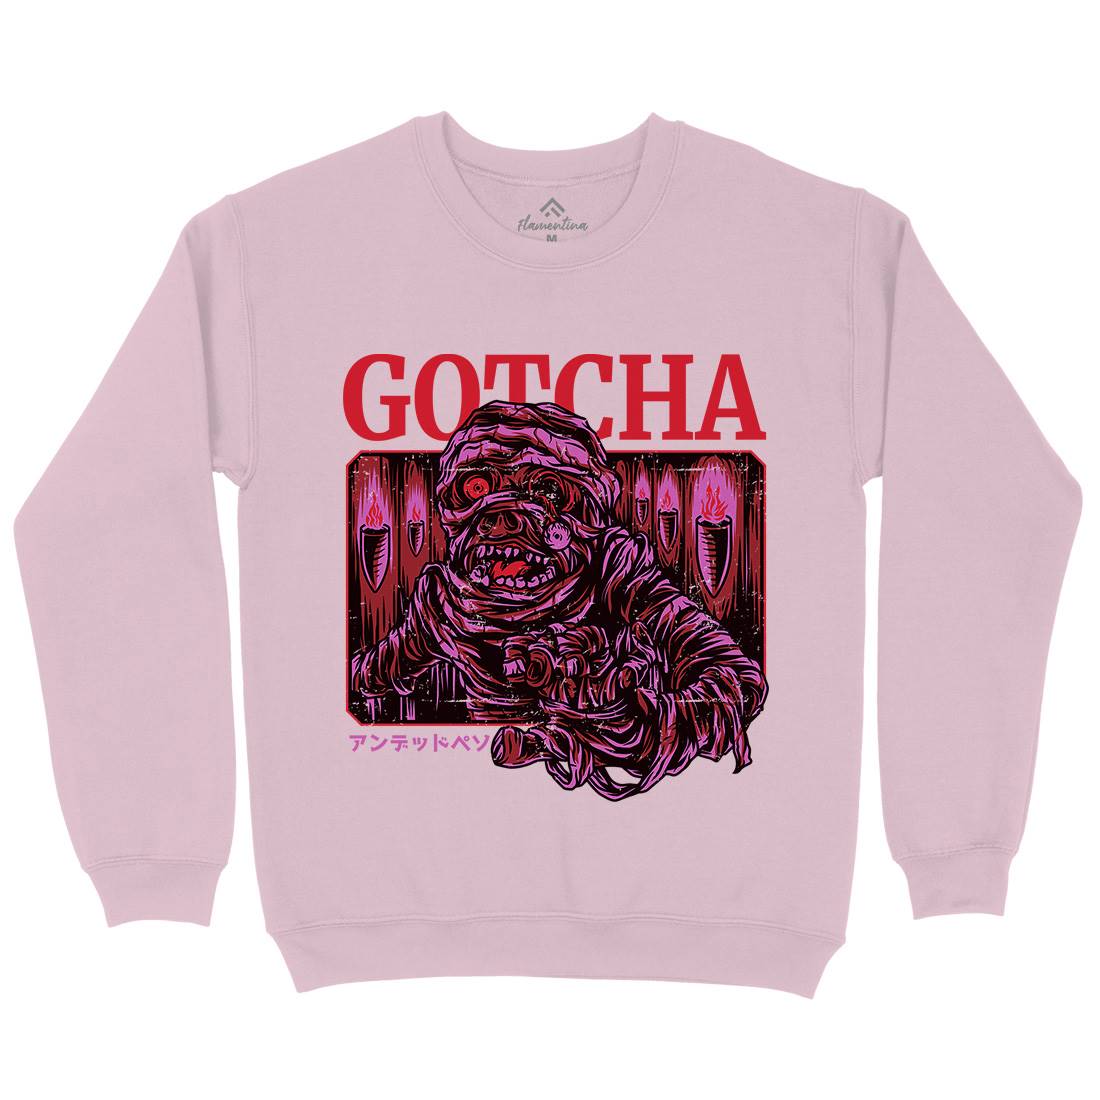 Gotcha Kids Crew Neck Sweatshirt Horror D799